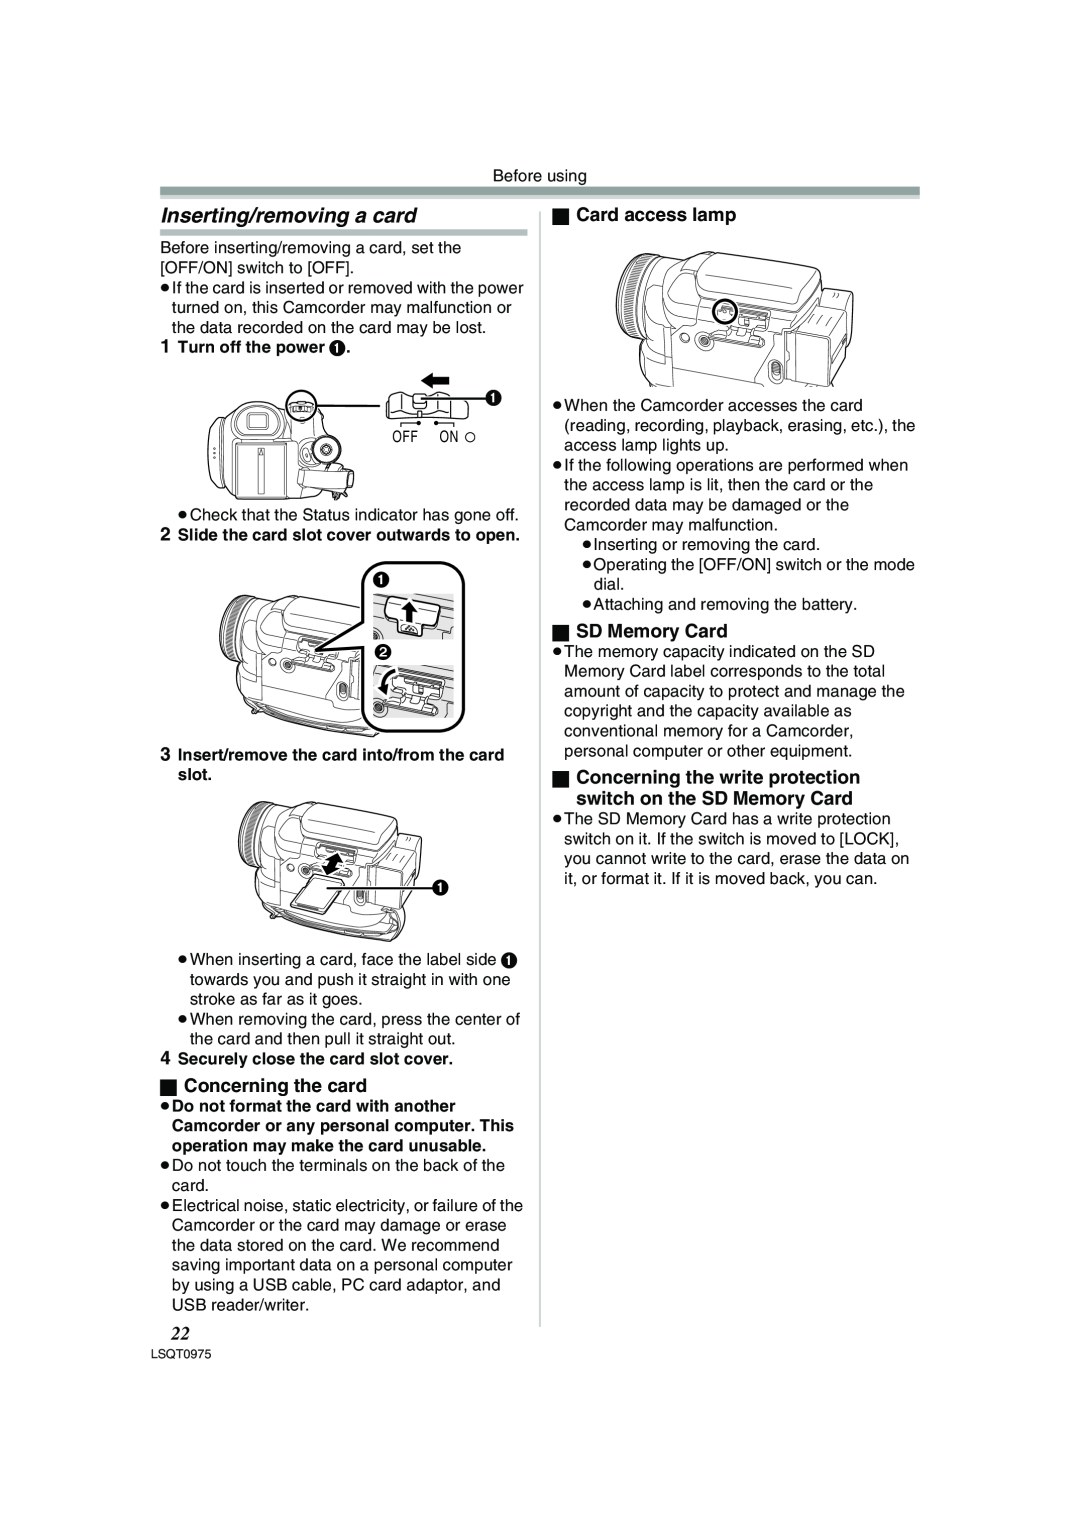 Panasonic PV-GS500 Inserting/removing a card, ª Concerning the card, ª Card access lamp, ª SD Memory Card 